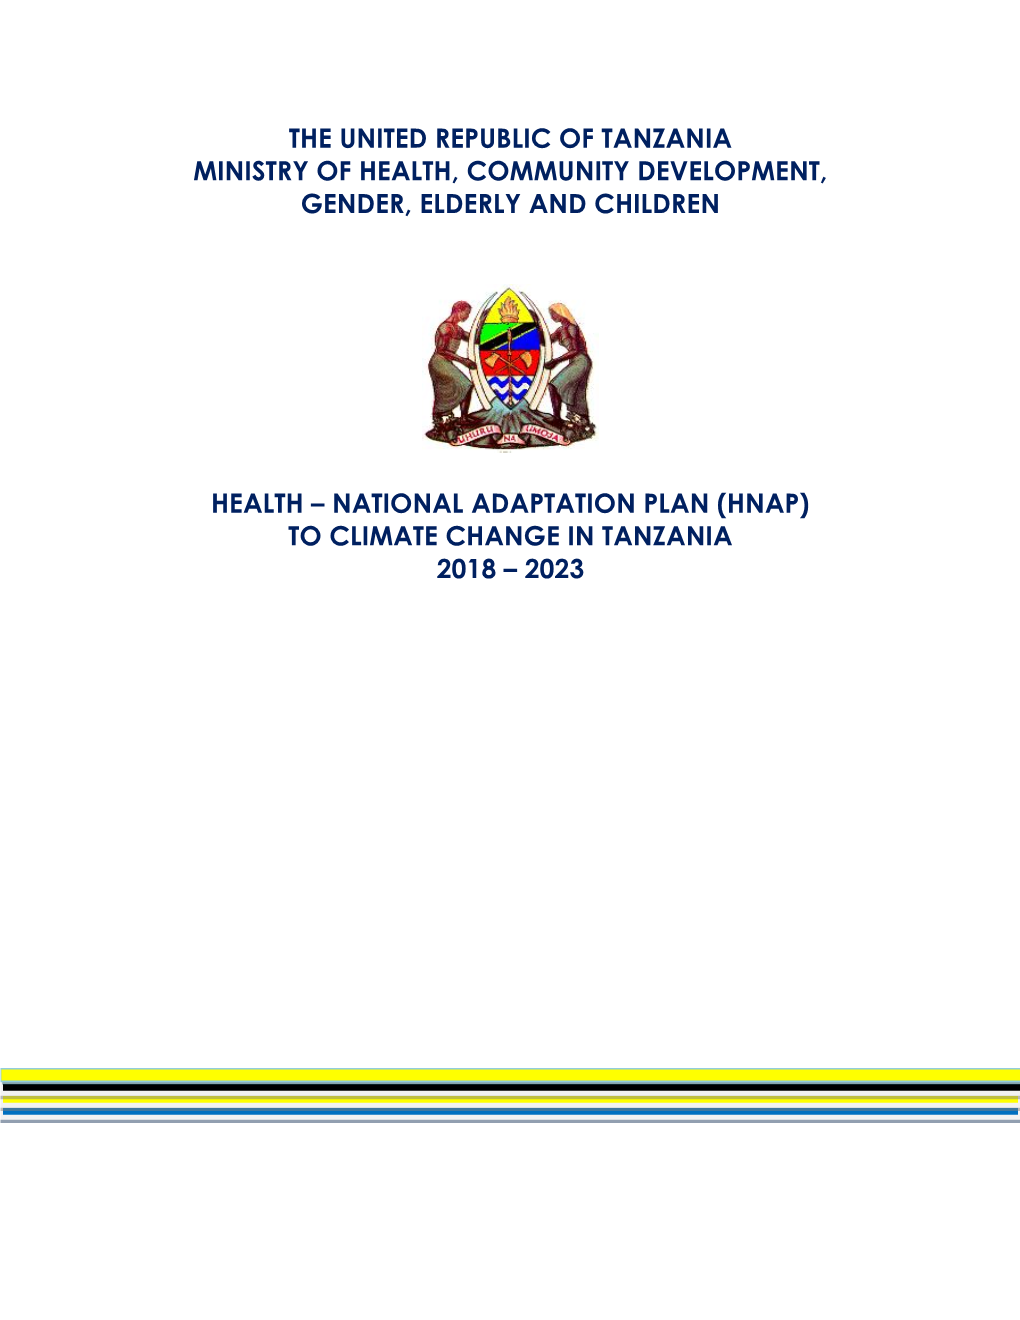 The United Republic of Tanzania Ministry of Health, Community Development, Gender, Elderly and Children Health